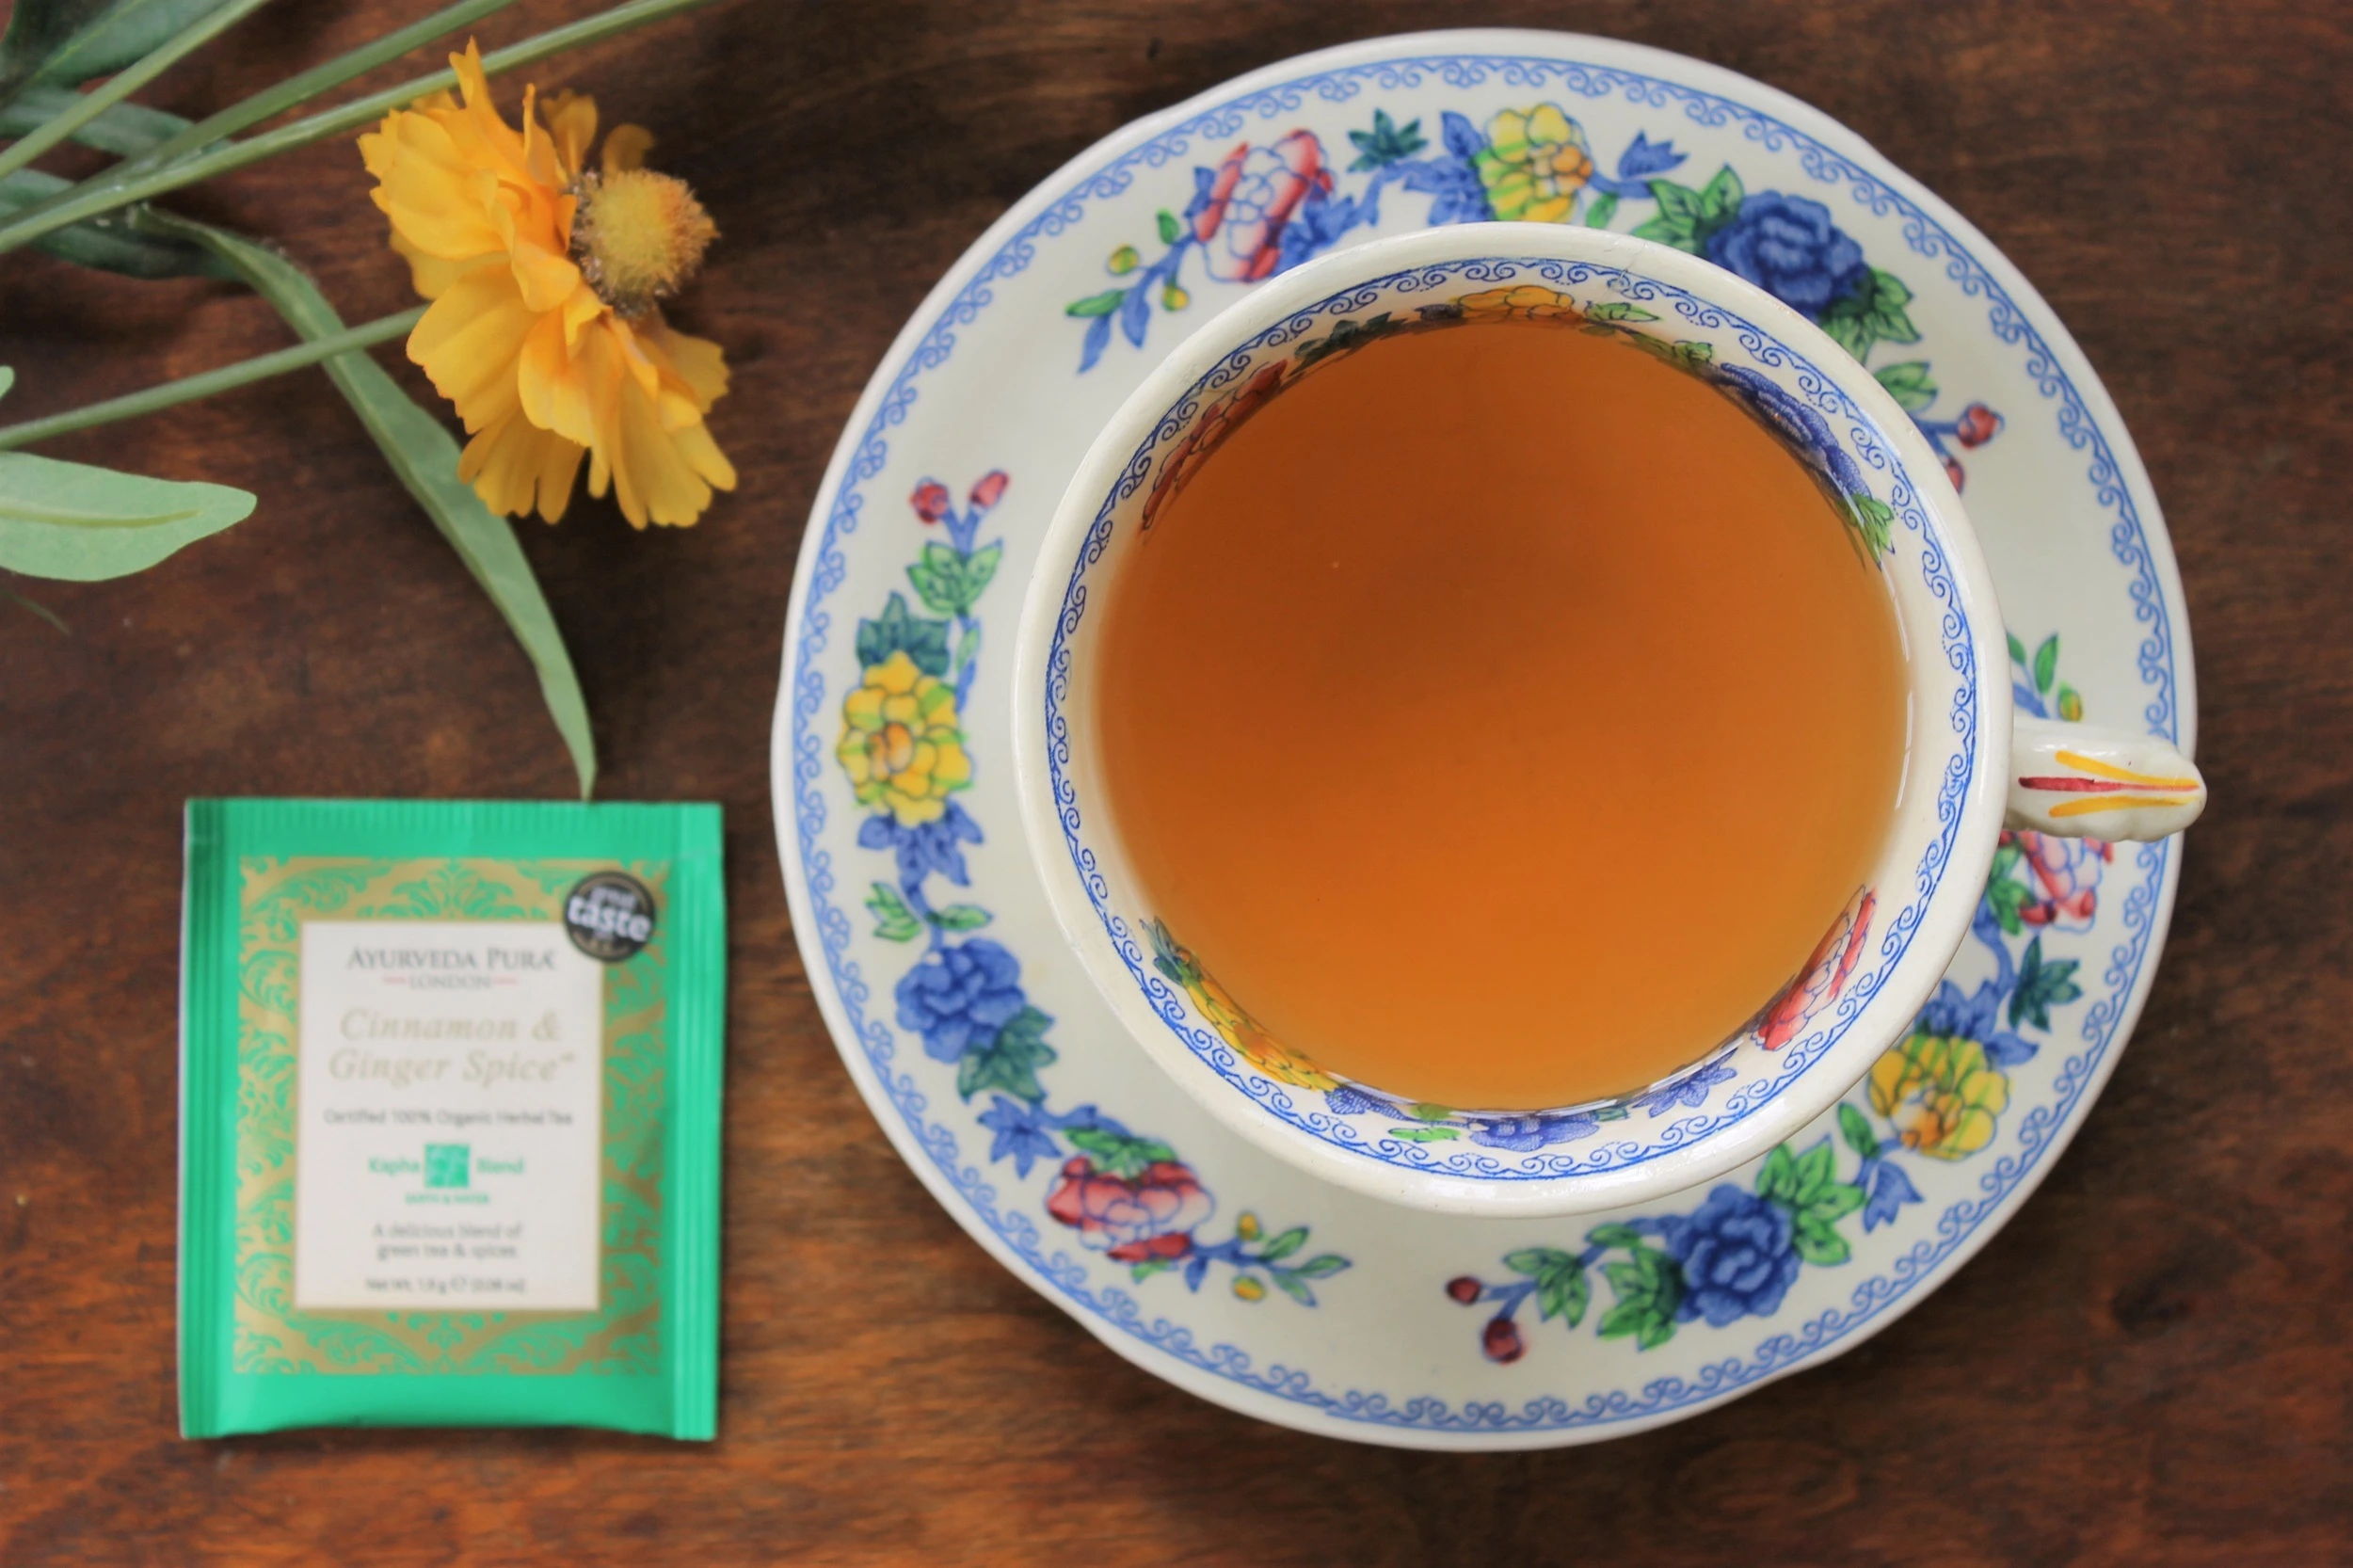 ayurveda pura cinnamon and ginger spice tea review